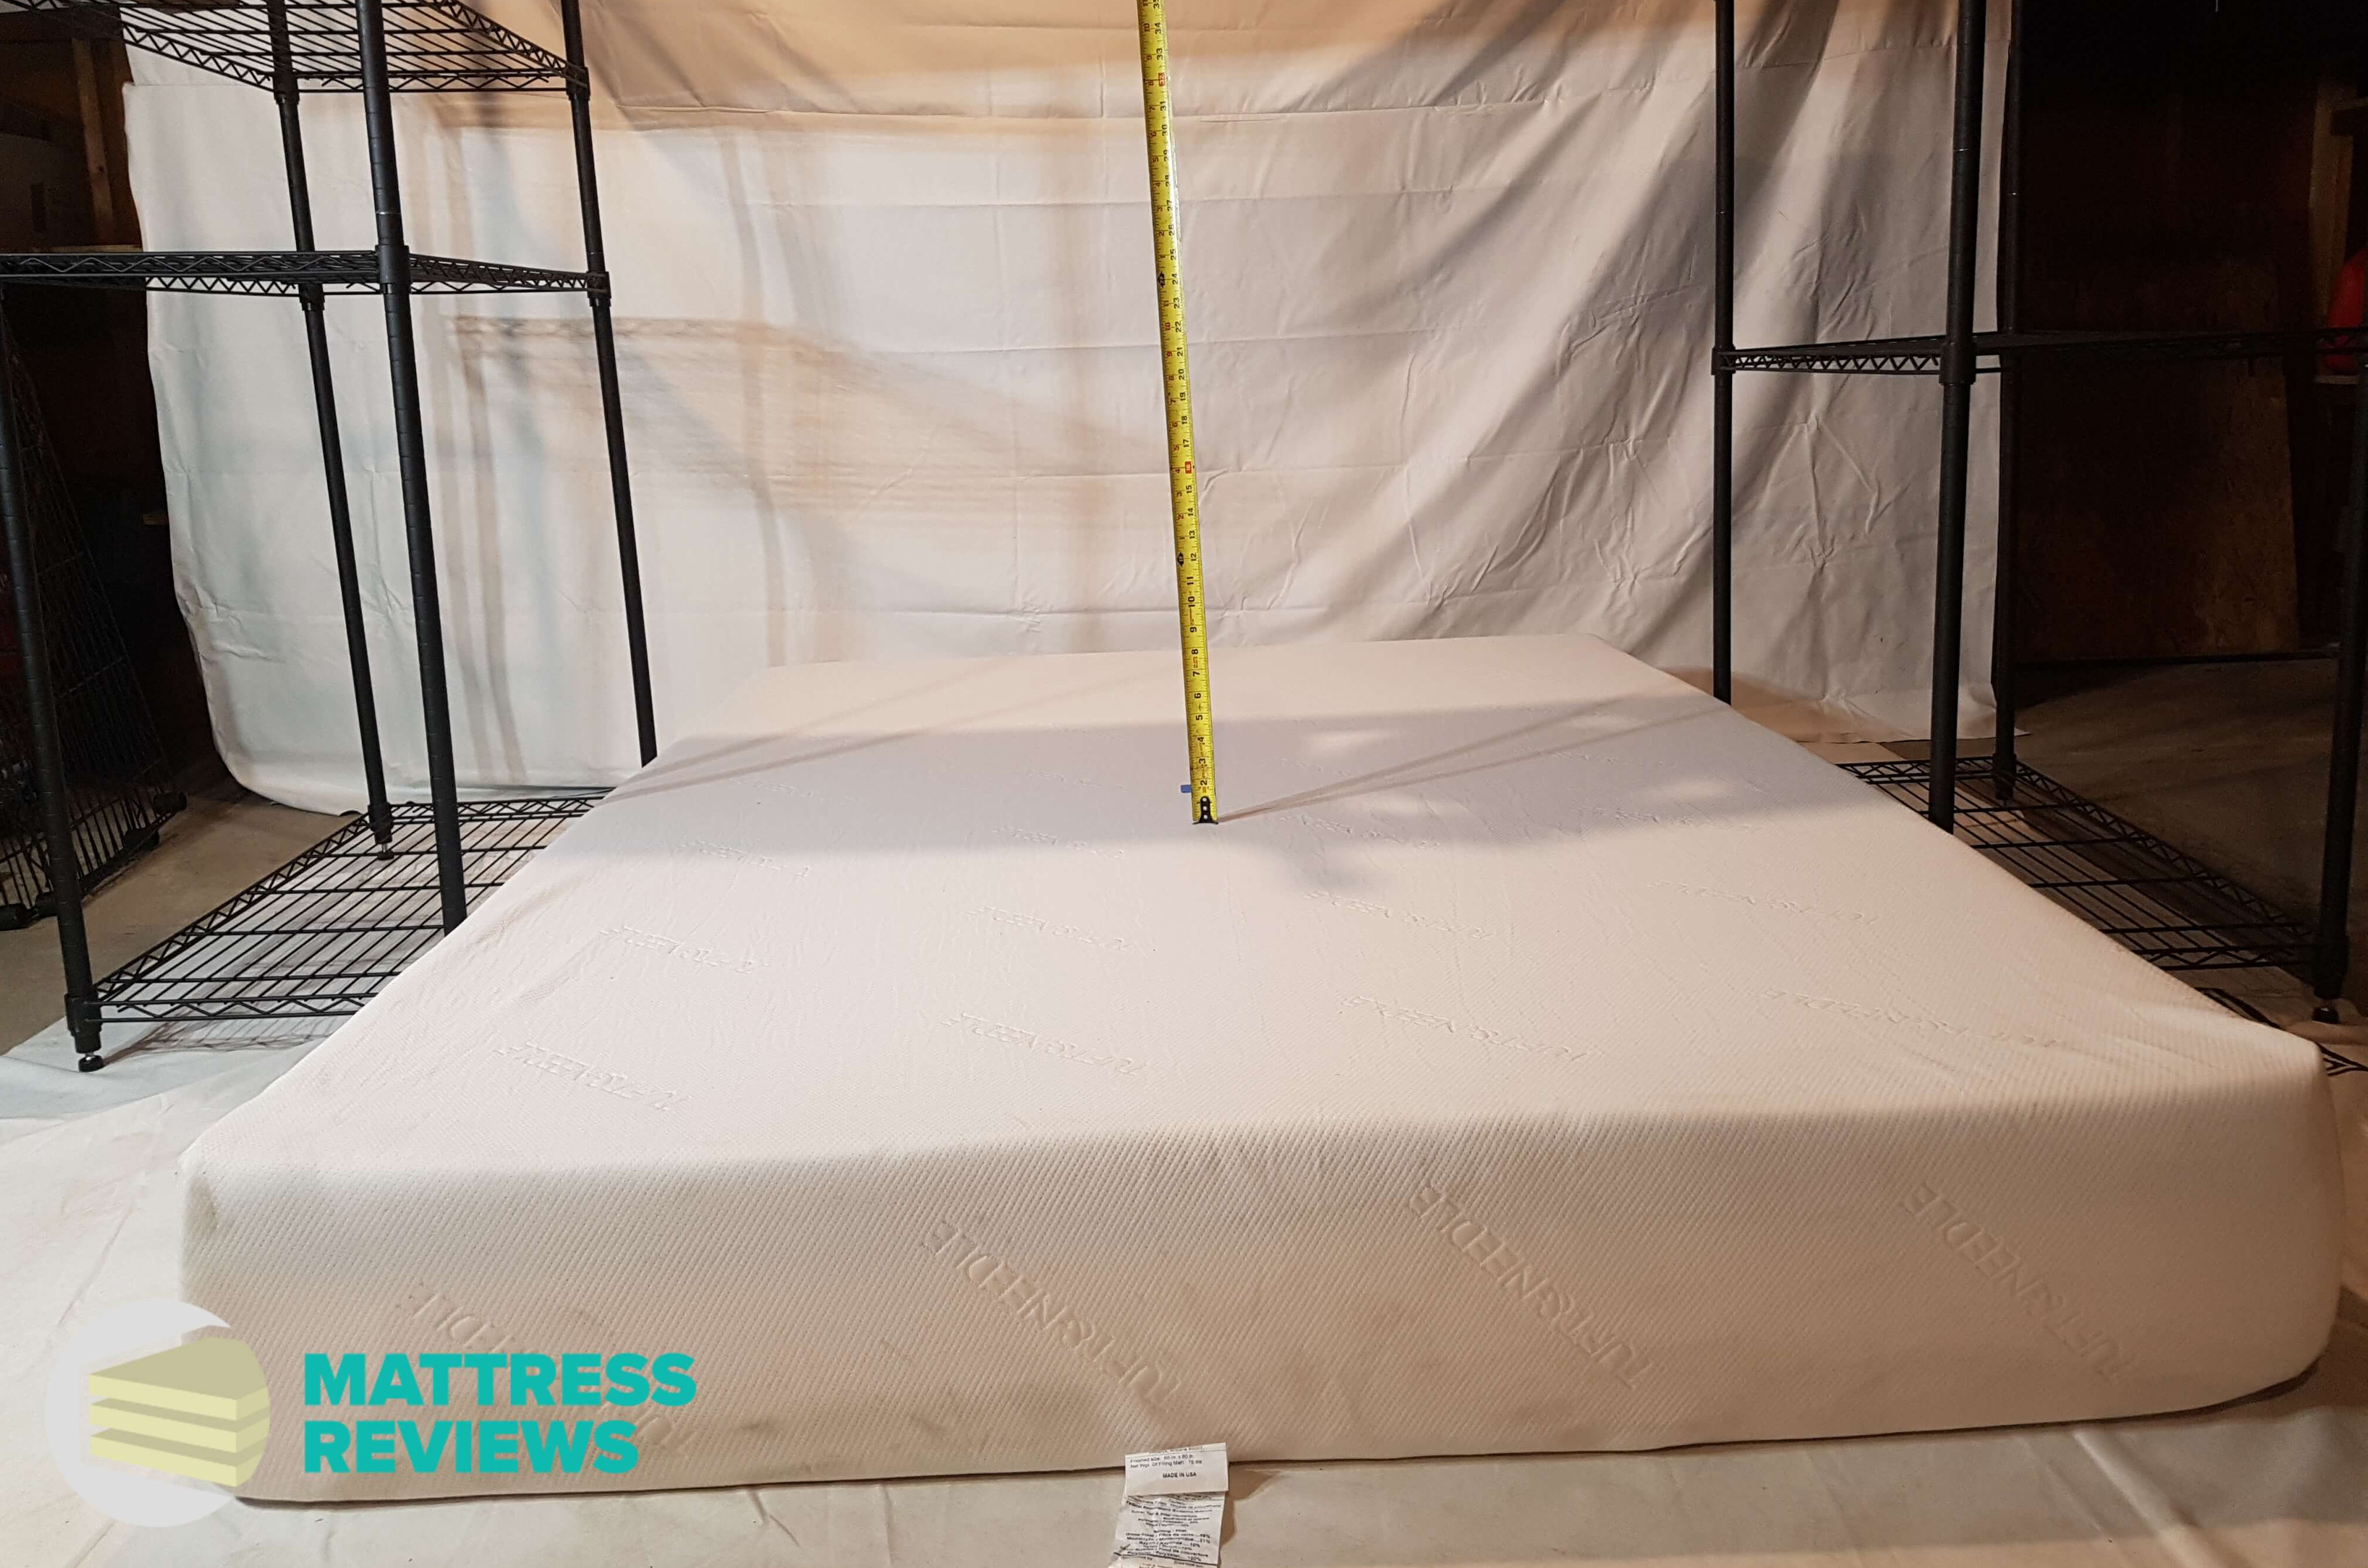 Image of the Tuft & Needle mattress bounce test.